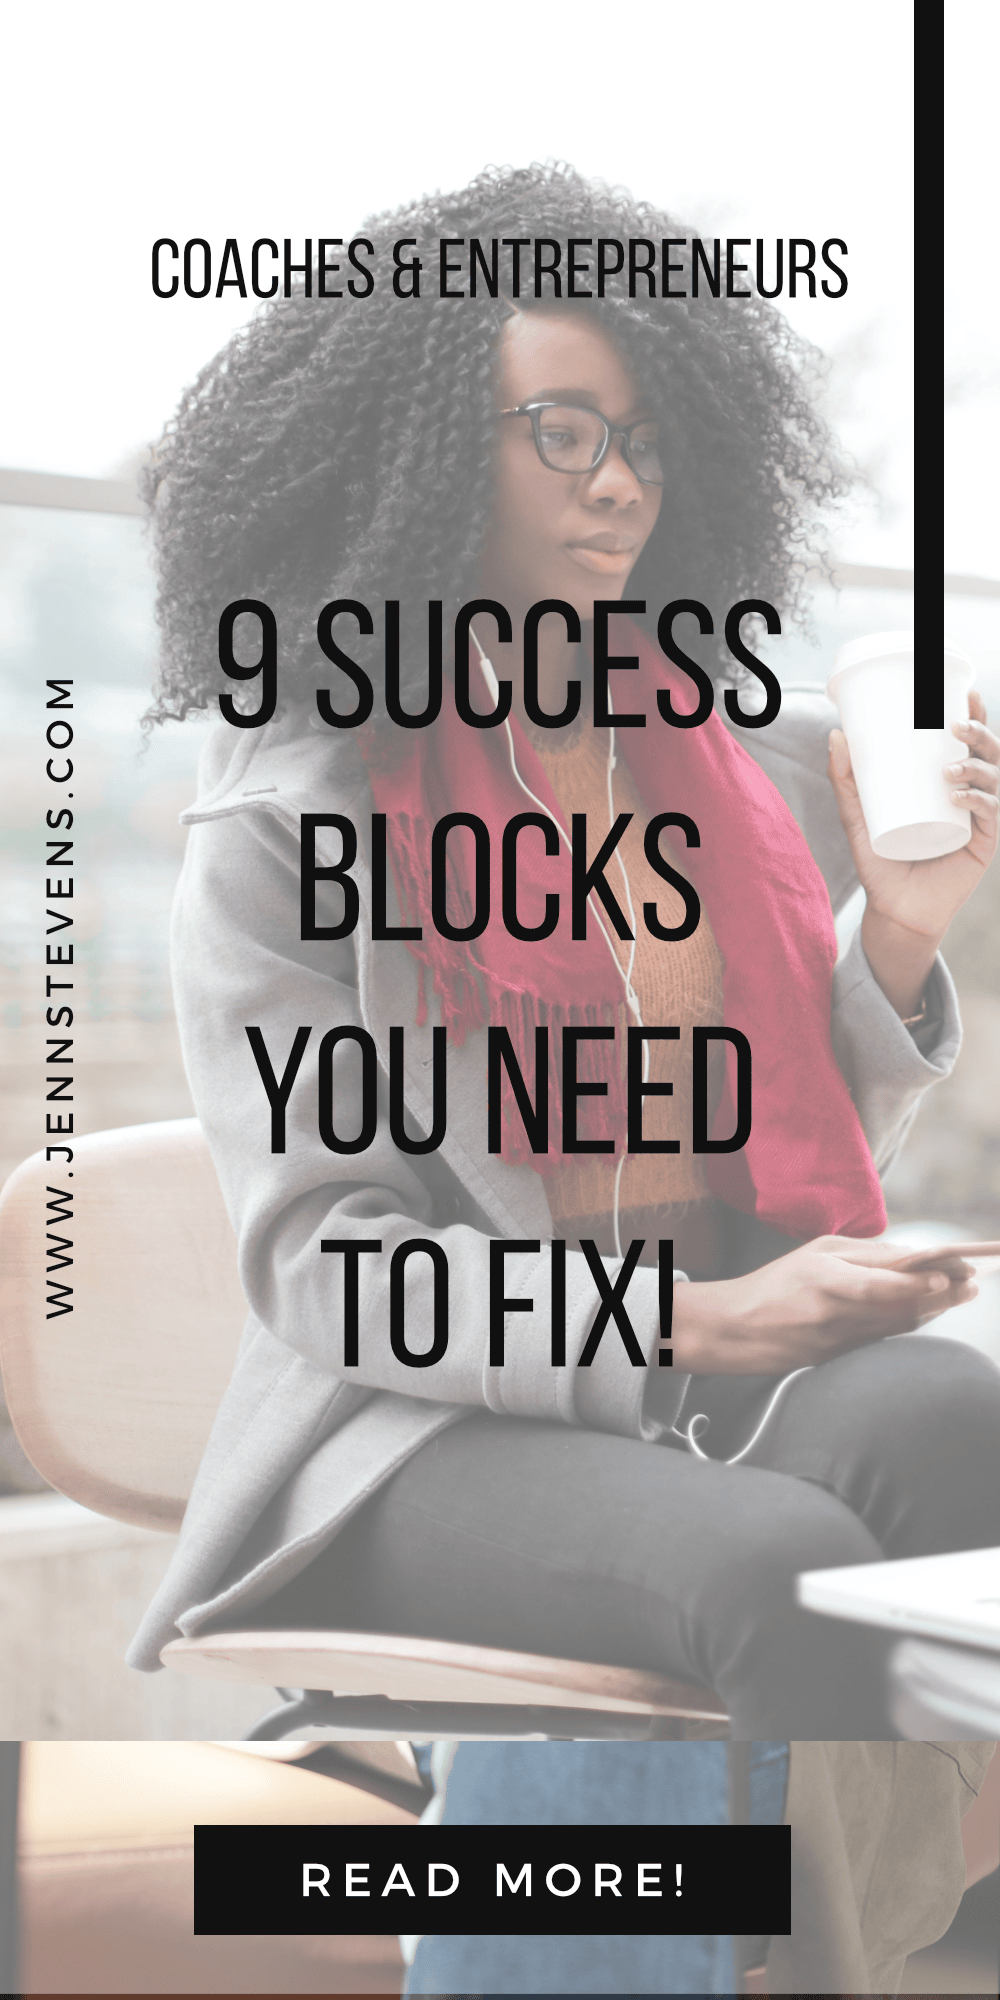 Entrepreneurs! 9 Success Blocks You Need To Fix